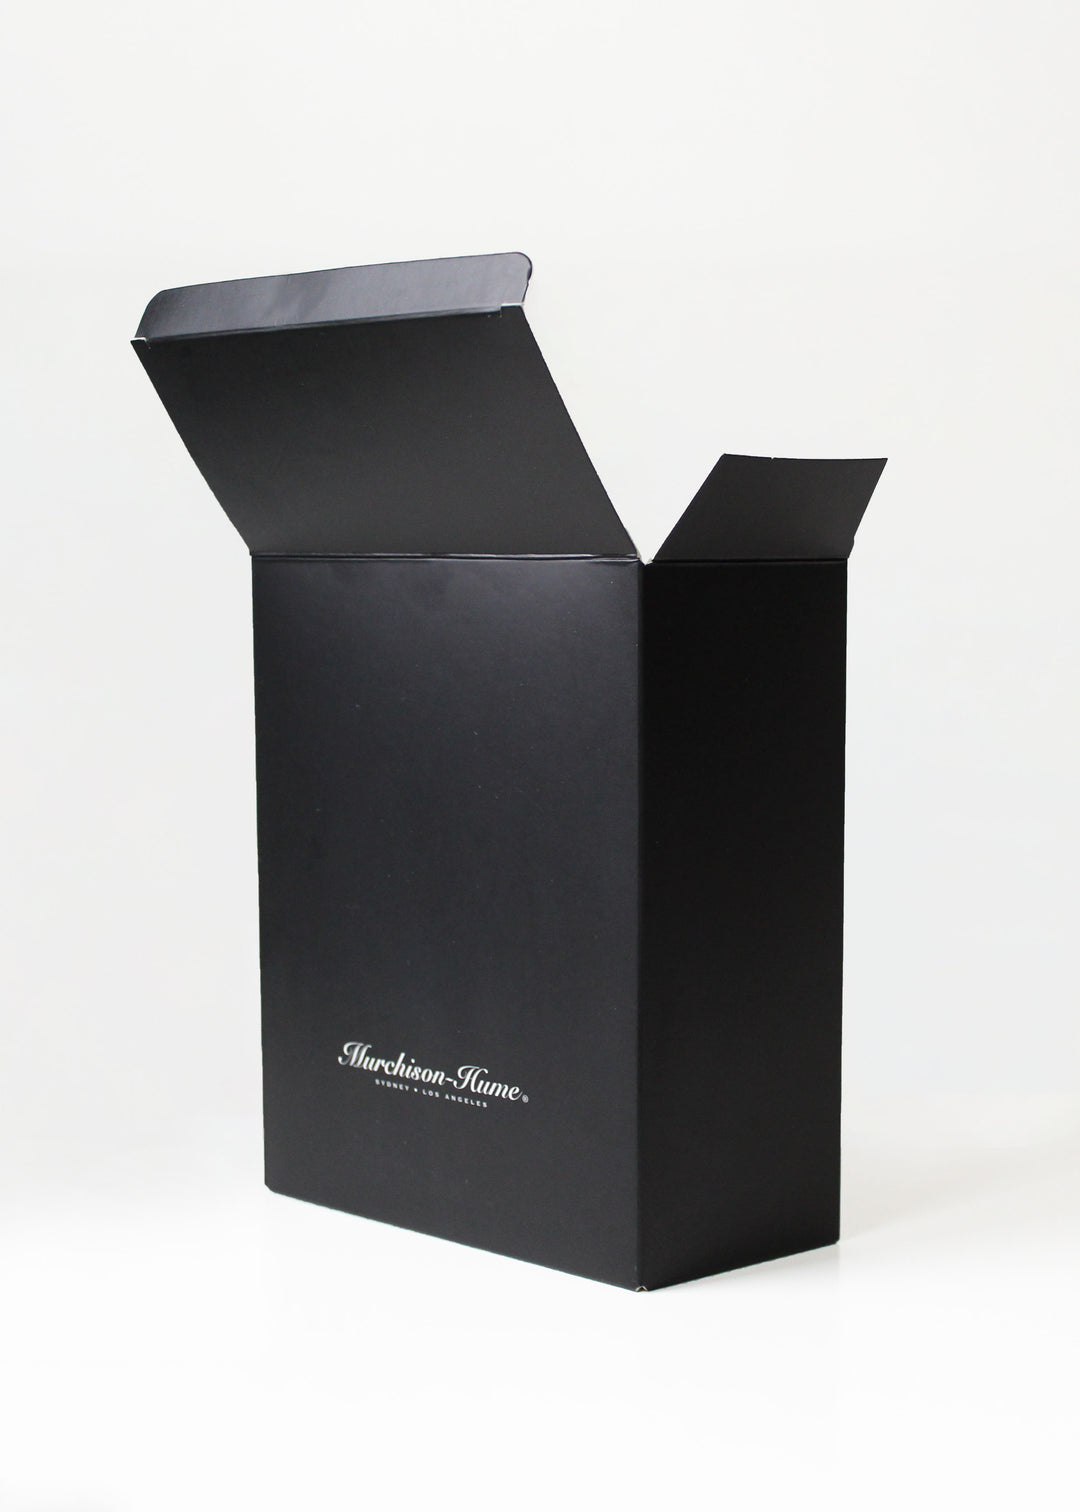 Murchison-Hume Gift Box Black